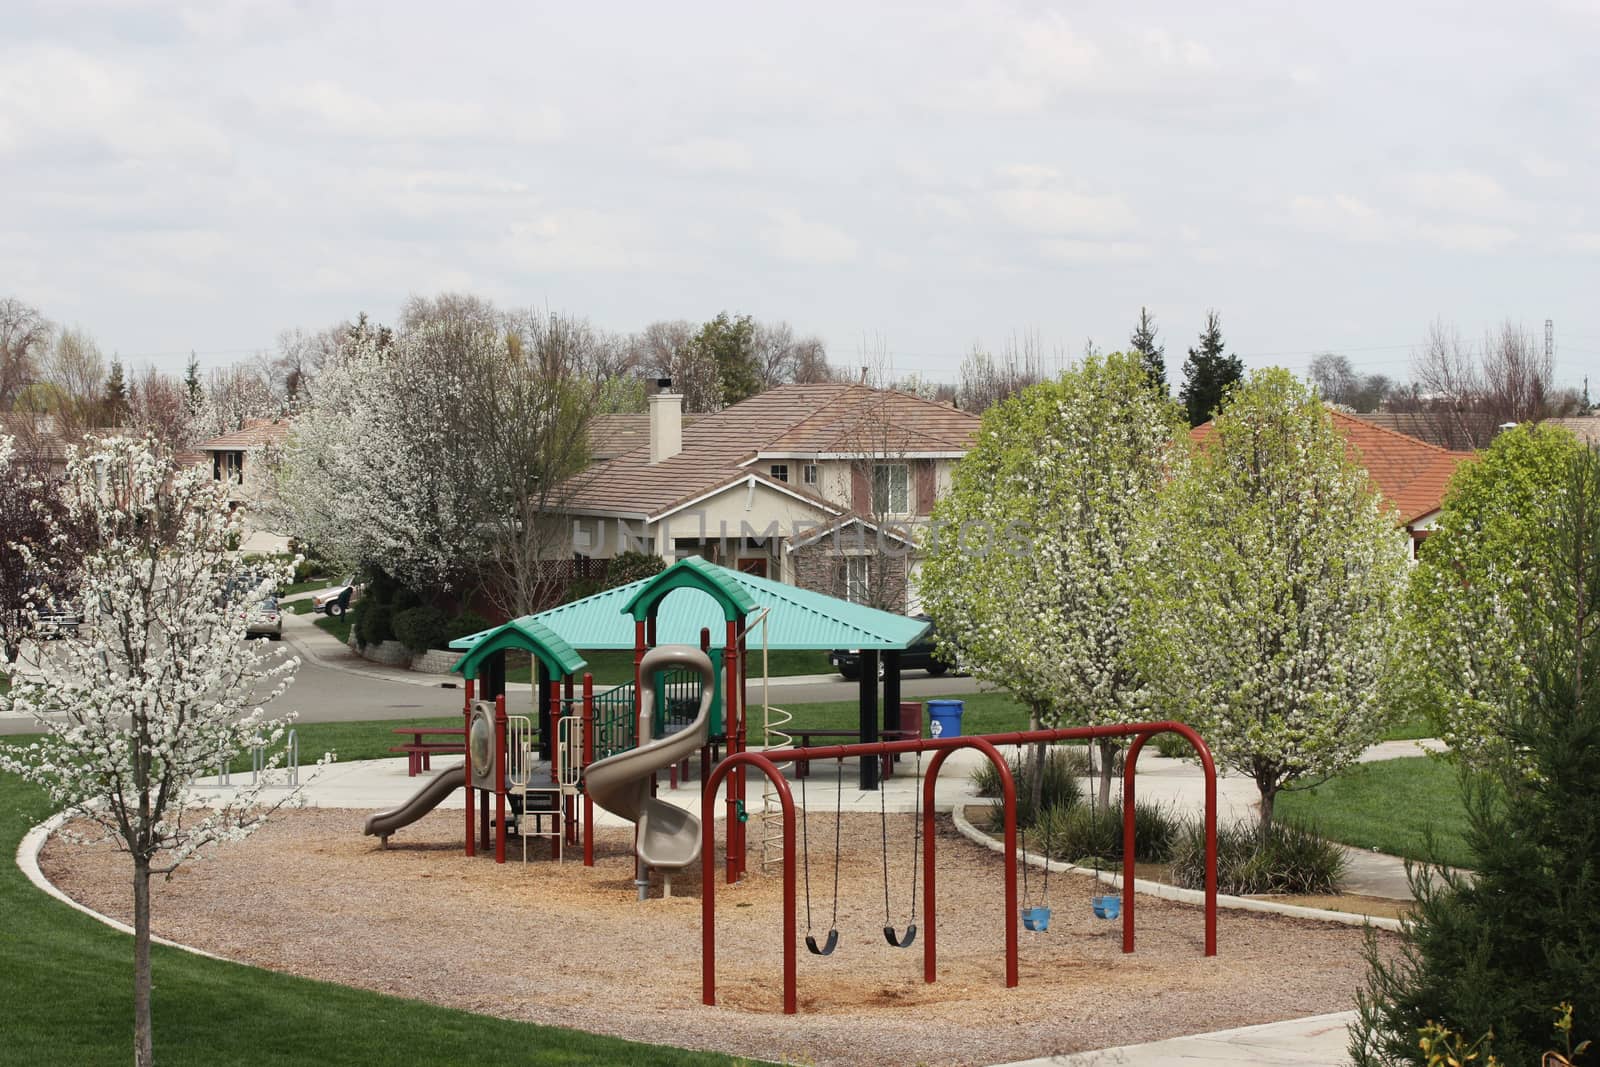 Small Neighborhood Playground in residential community